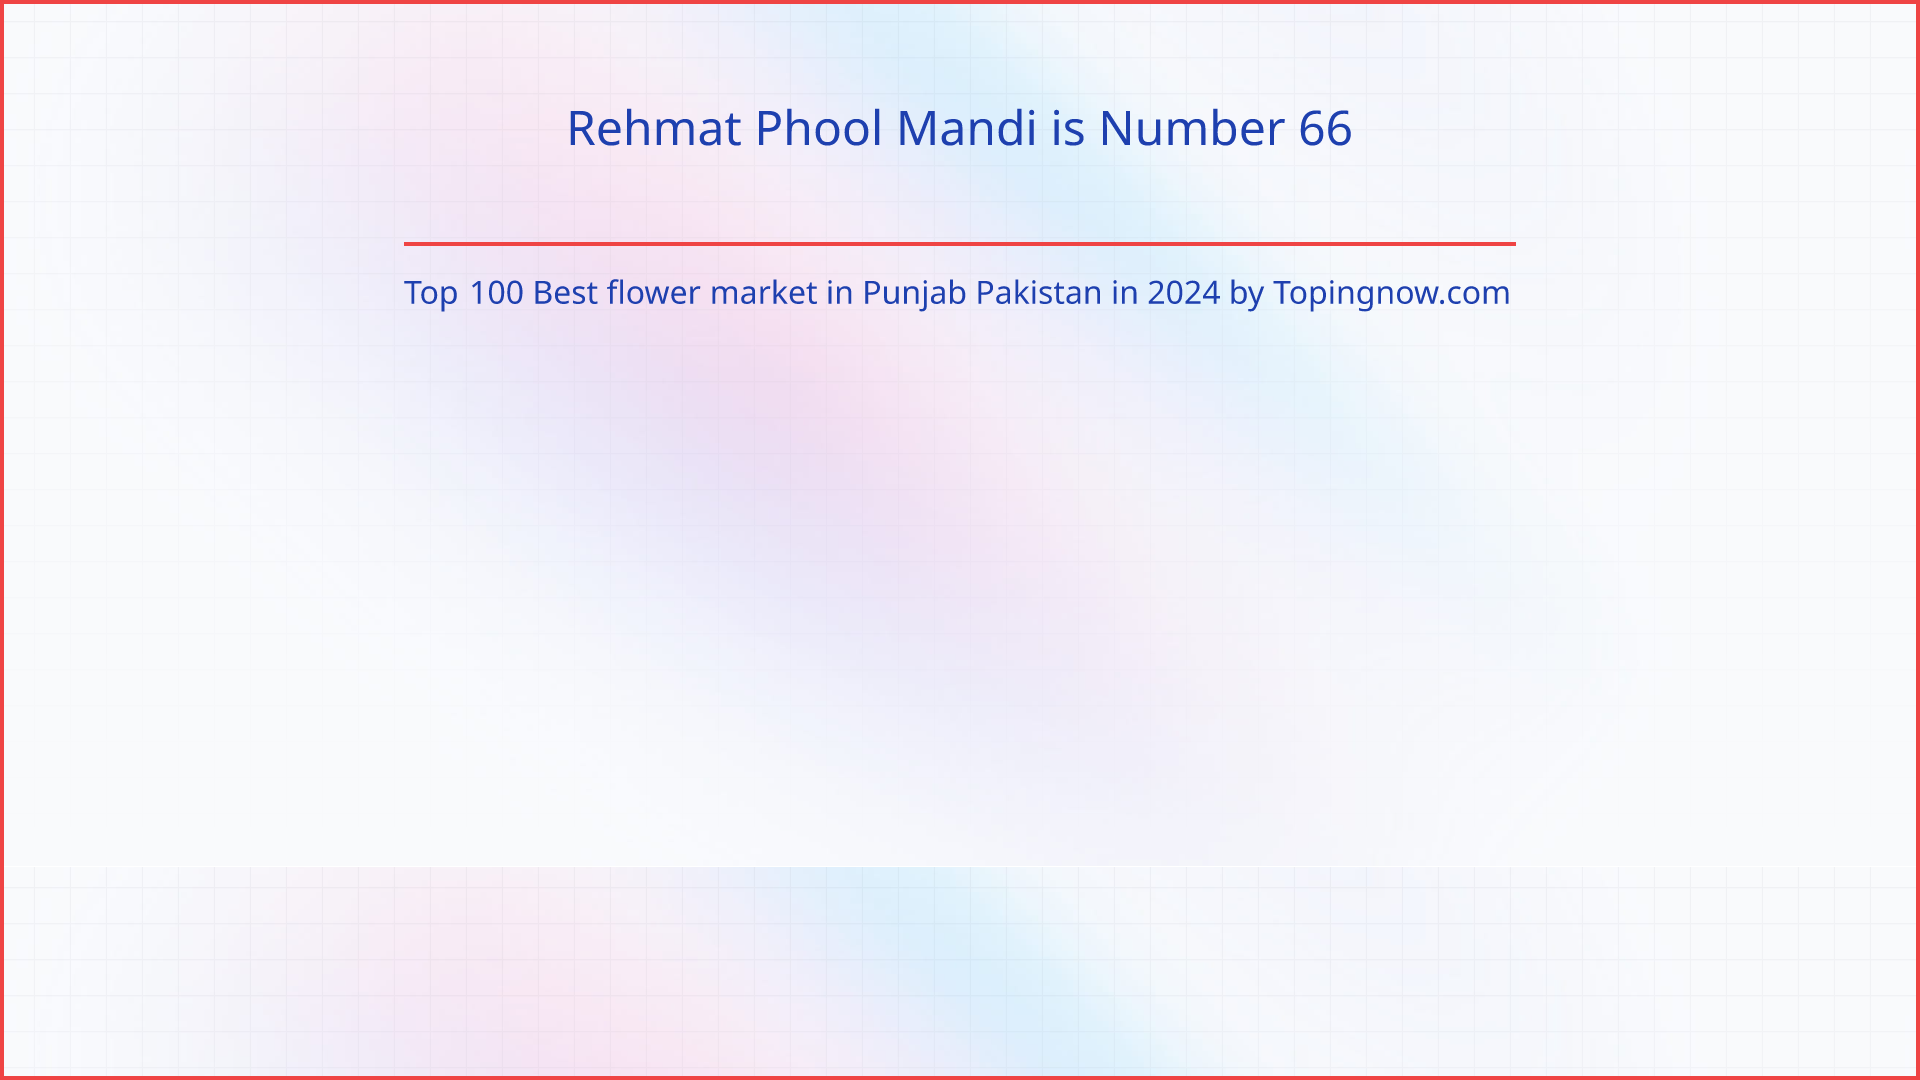 Rehmat Phool Mandi: Top 100 Best flower market in Punjab Pakistan in 2024